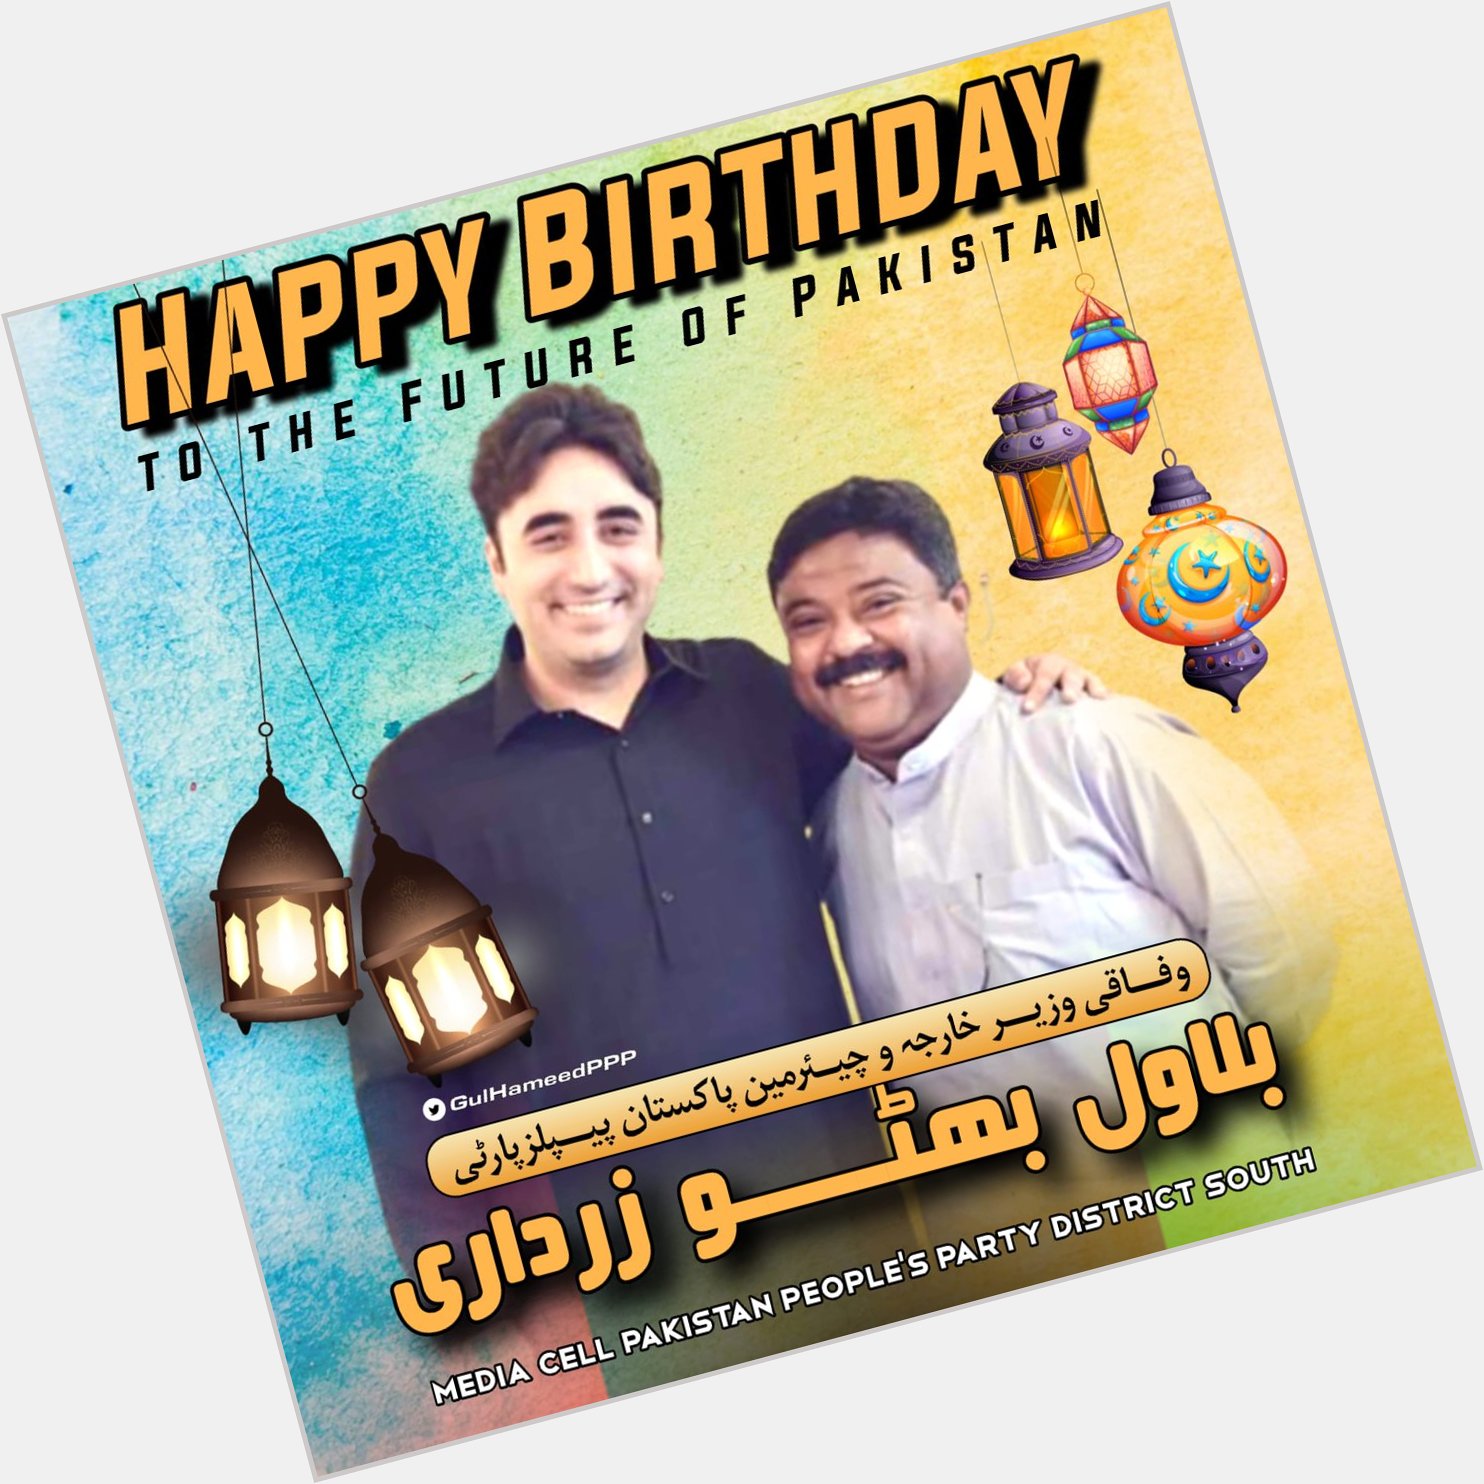 Happy Birthday to the future of Pakistan, Chairman Bilawal Bhutto Zardari   